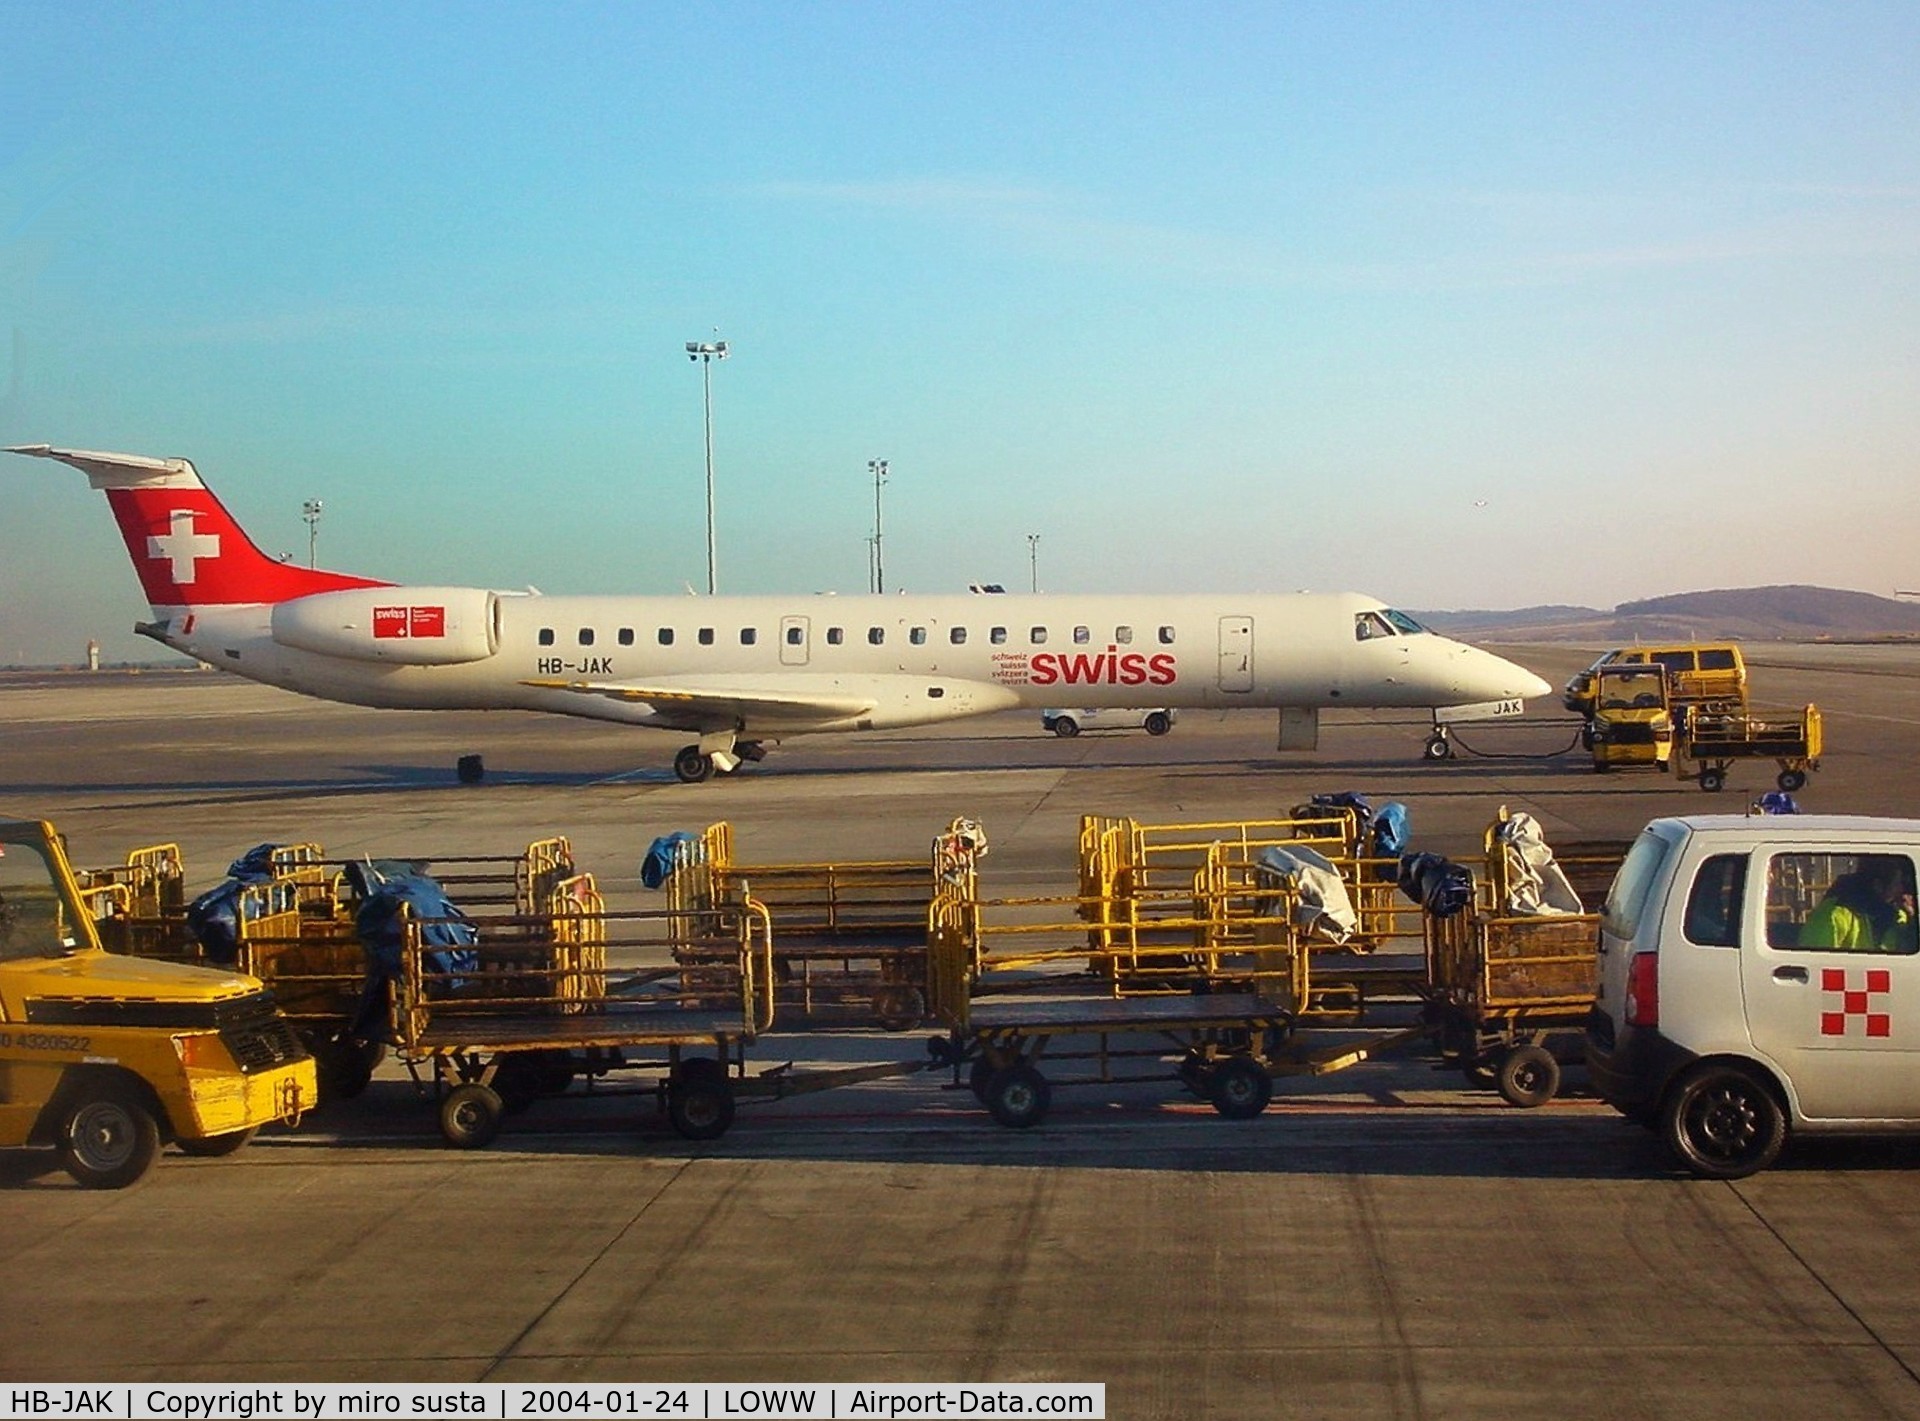 HB-JAK, 2001 Embraer EMB-145LU (ERJ-145LU) C/N 145387, Swiss Airlines Embraer EMB-145LU docked at Vienna-Schwechat International Airport.